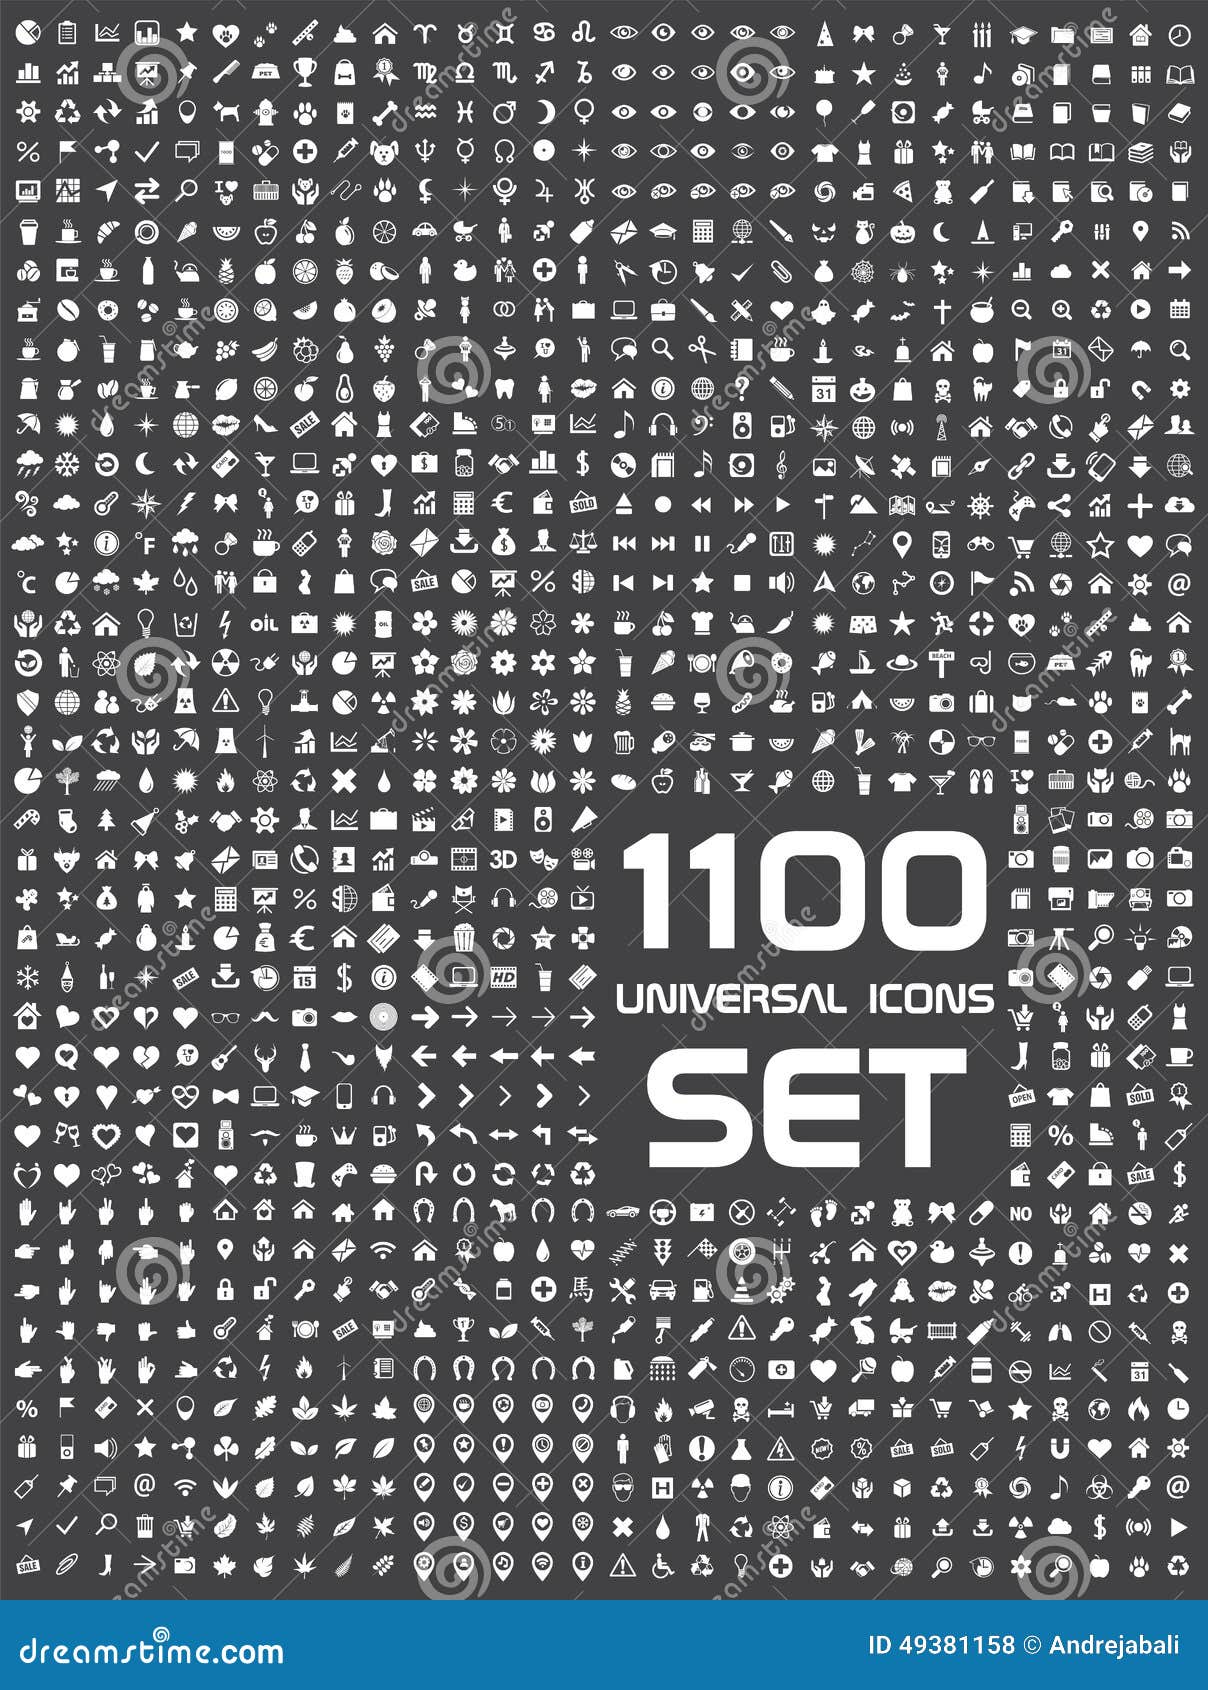 universal set of 1100 icons